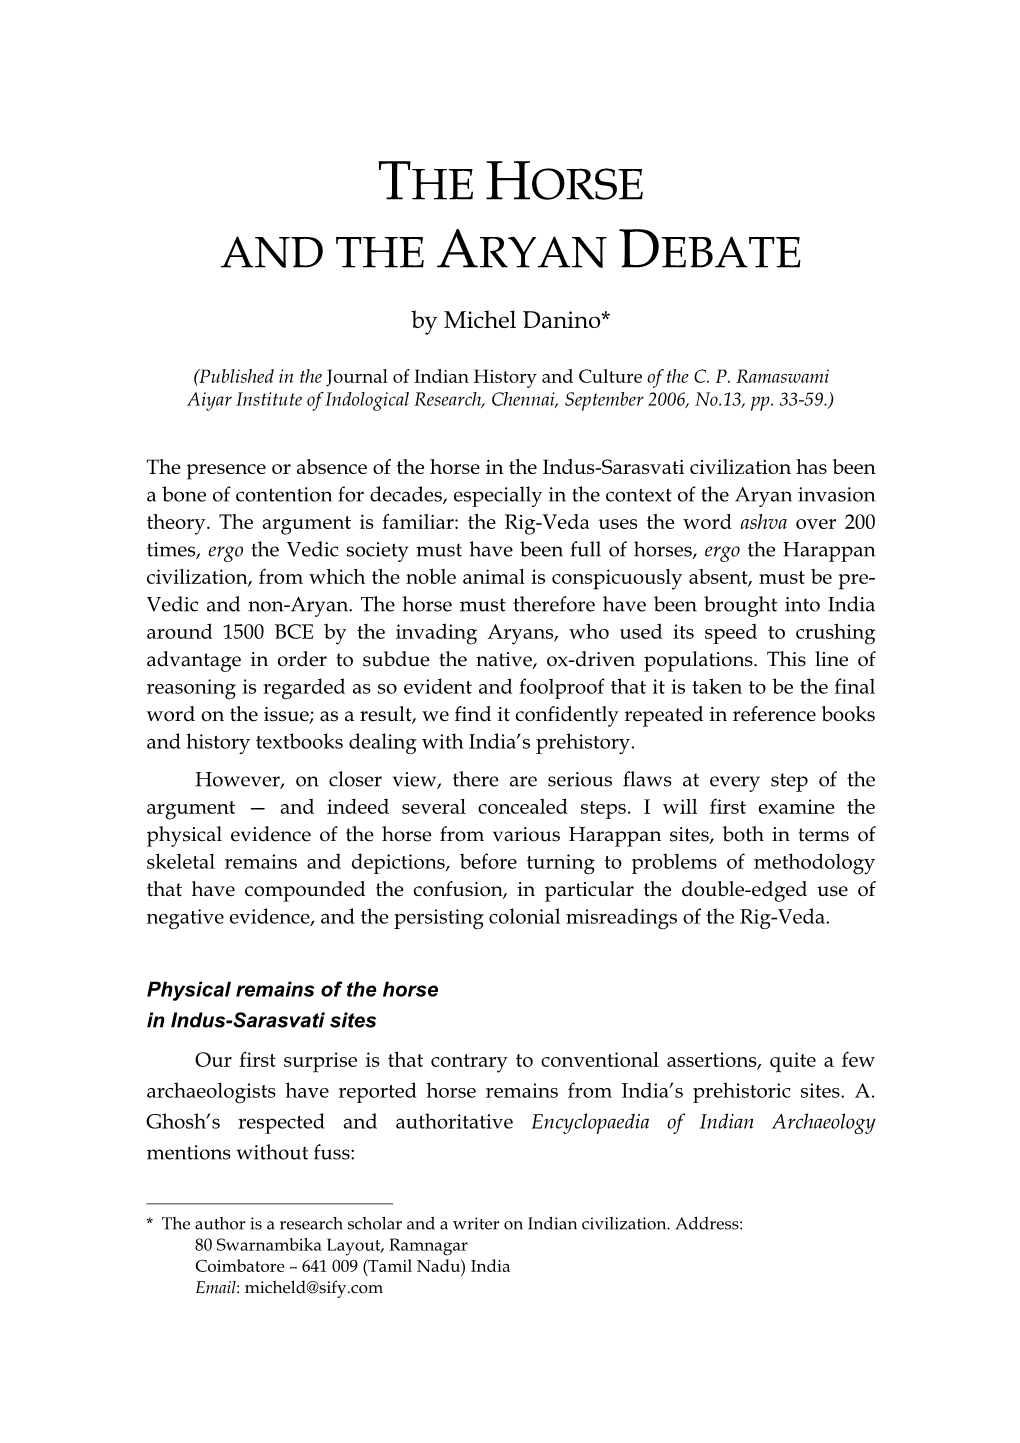 The Horse and the Aryan Debate